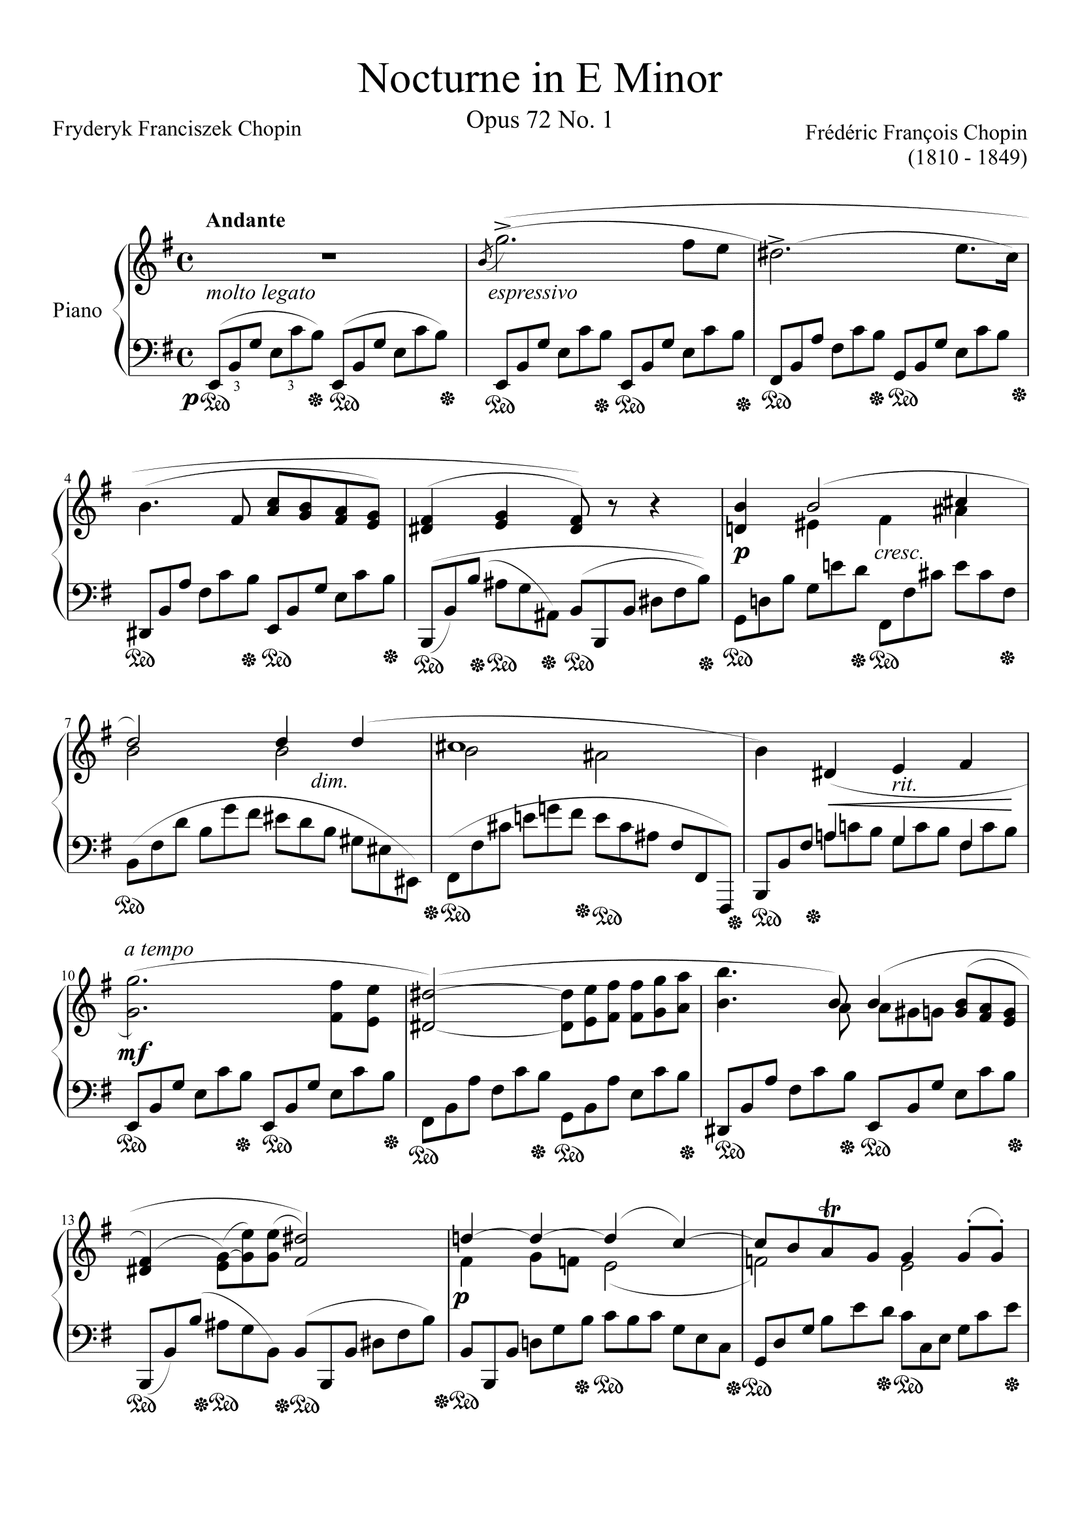 Notturno Op. 72 No. 1